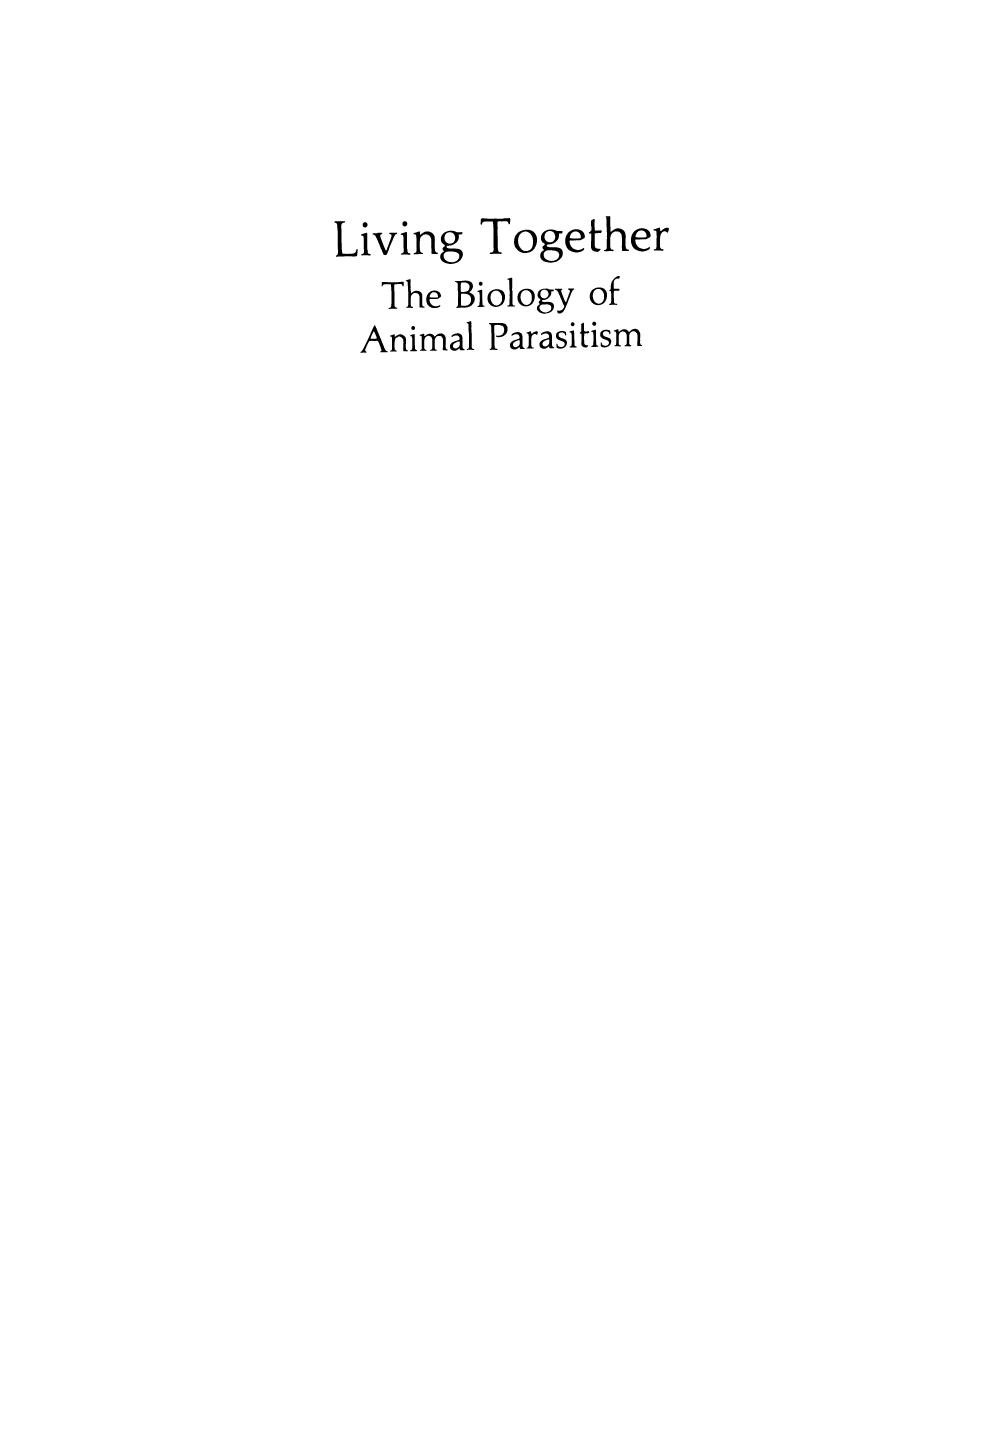 Living Together The Biology of Animal Parasitism   1986